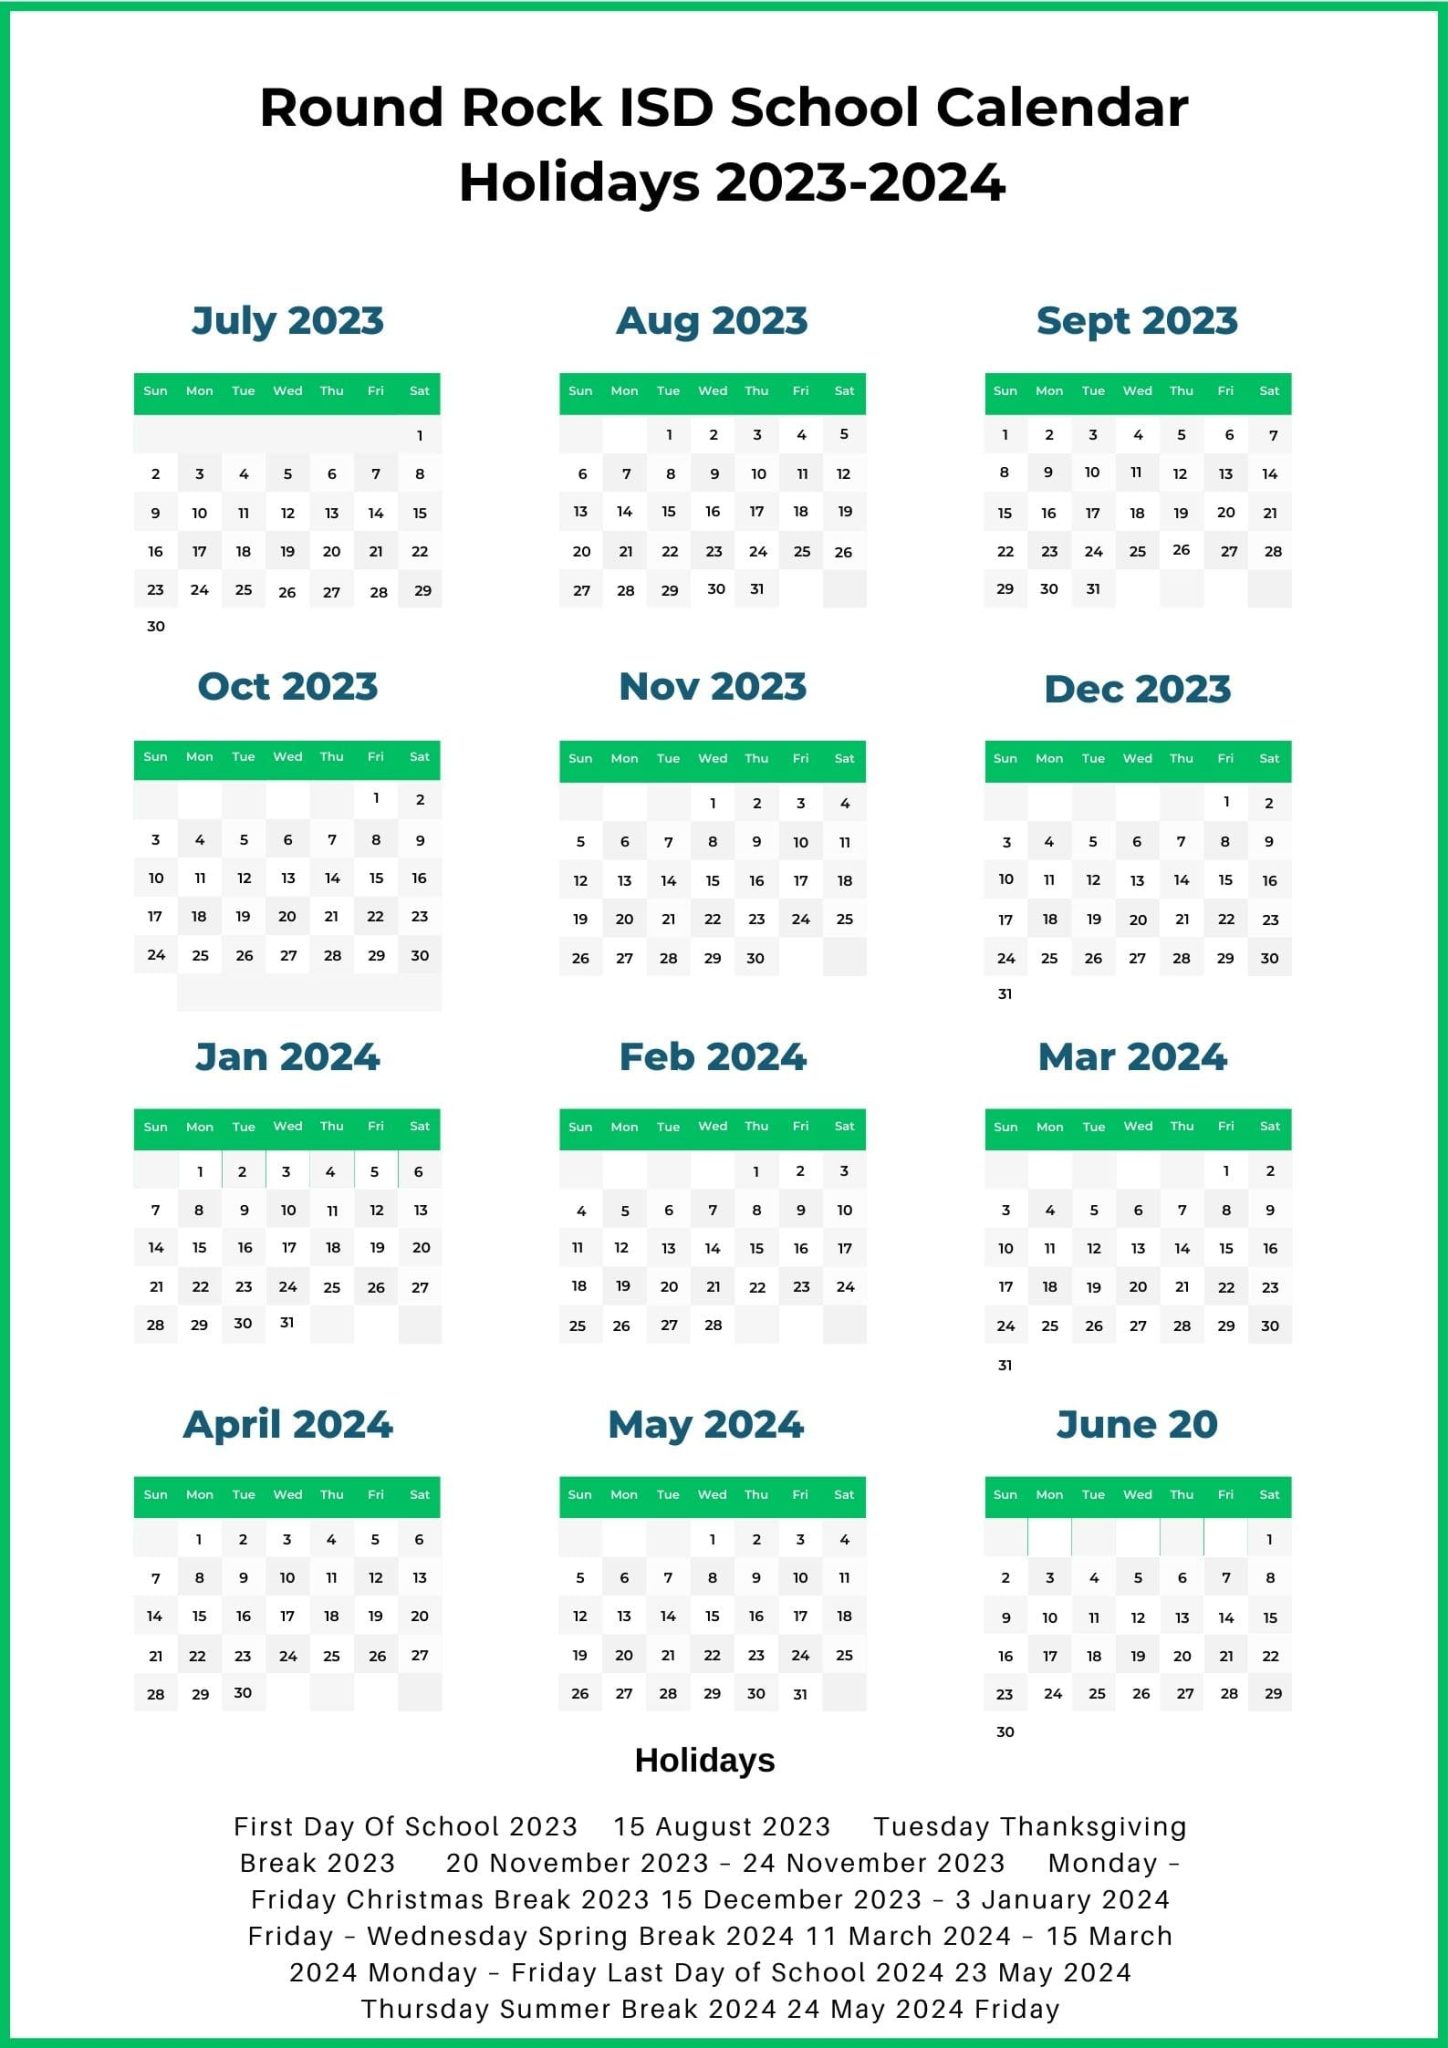 RRISD School Calendar & Holidays 20232024 [Round Rock ISD]